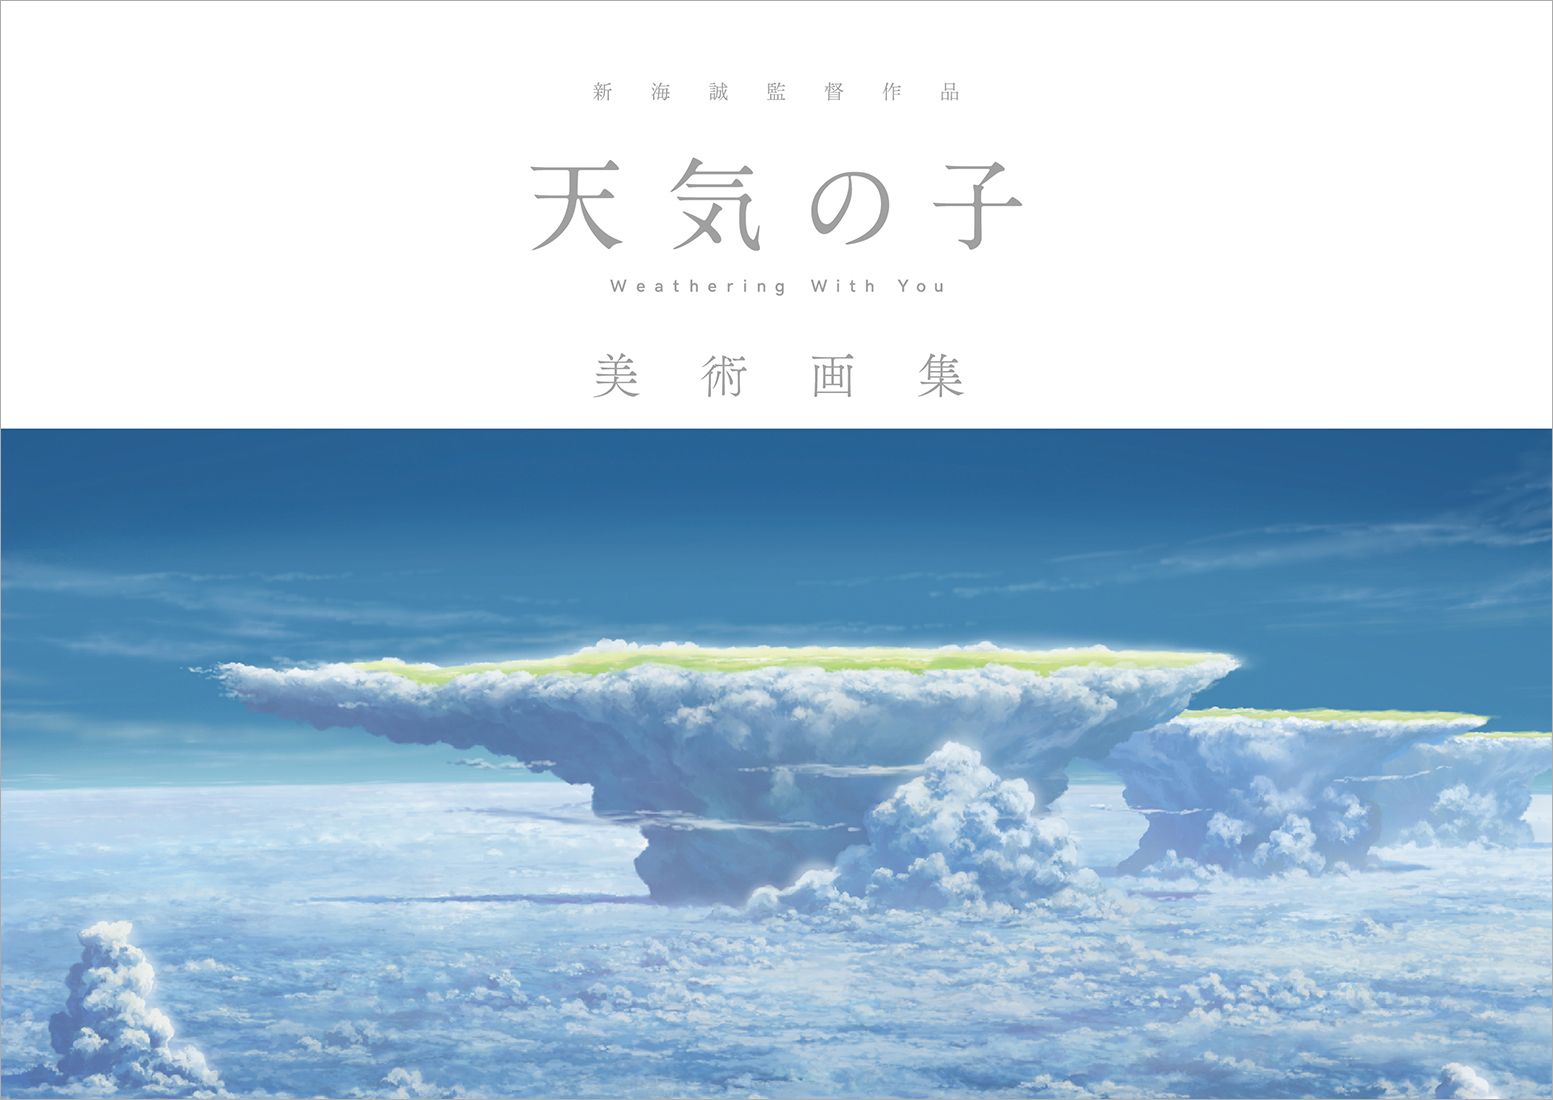 Weathering With You art book free wallpaper video conference call background Makoto Shinkai Your Name Japanese anime Japan news 1. SoraNews24 -Japan News